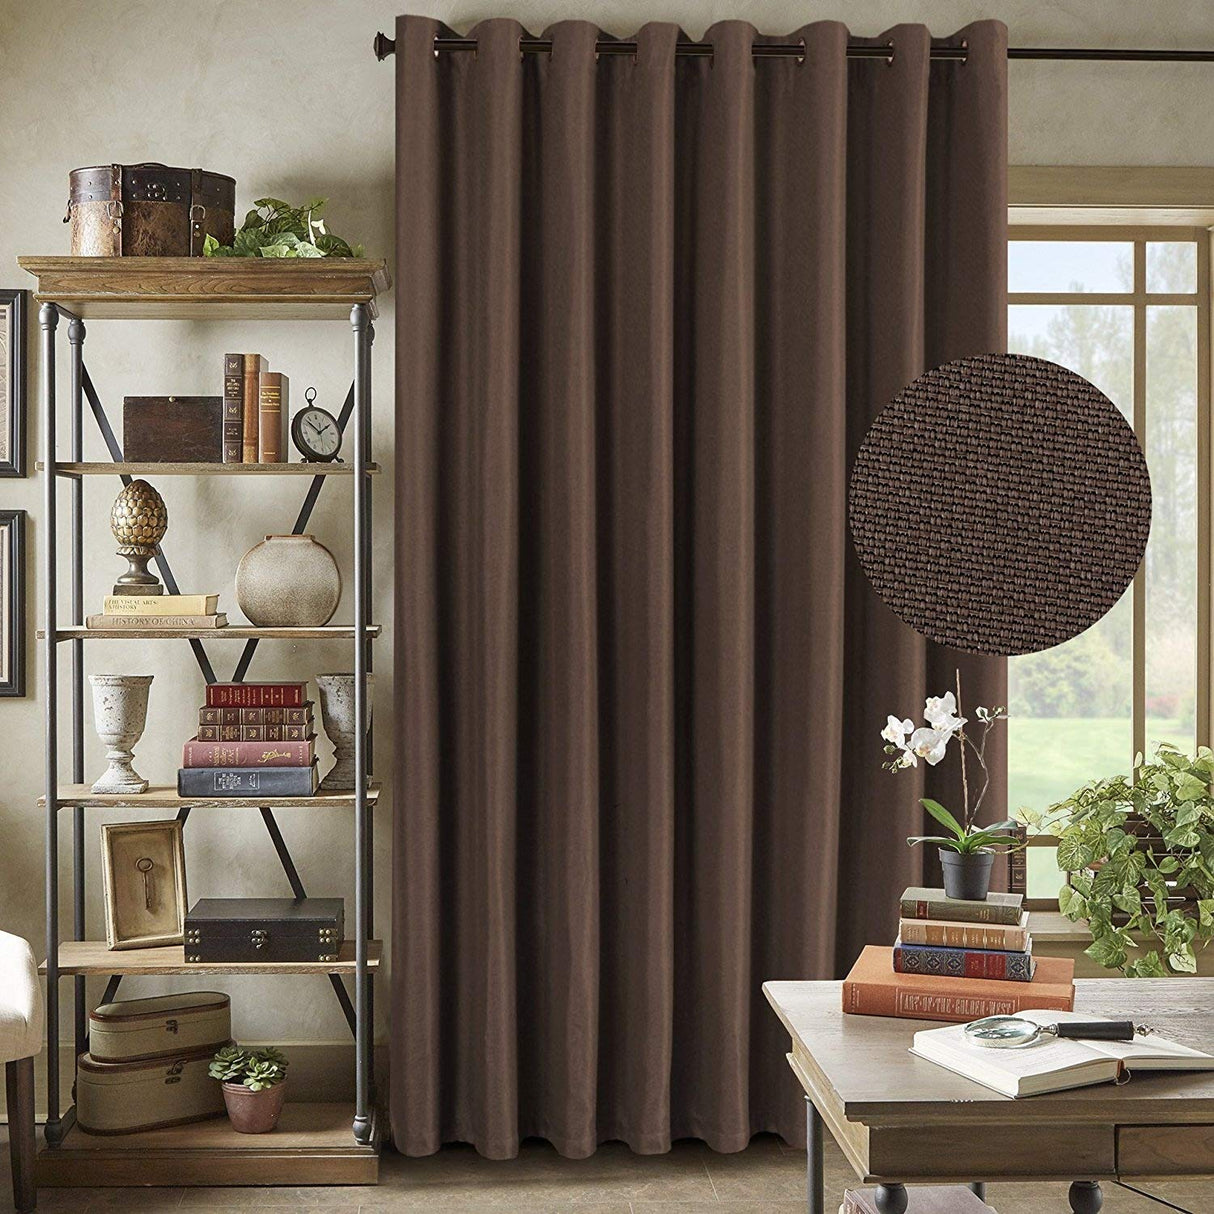 PrimeBeau Faux Linen Room Darkening/Room Dividing Curtain Draper Extra Wide & Long